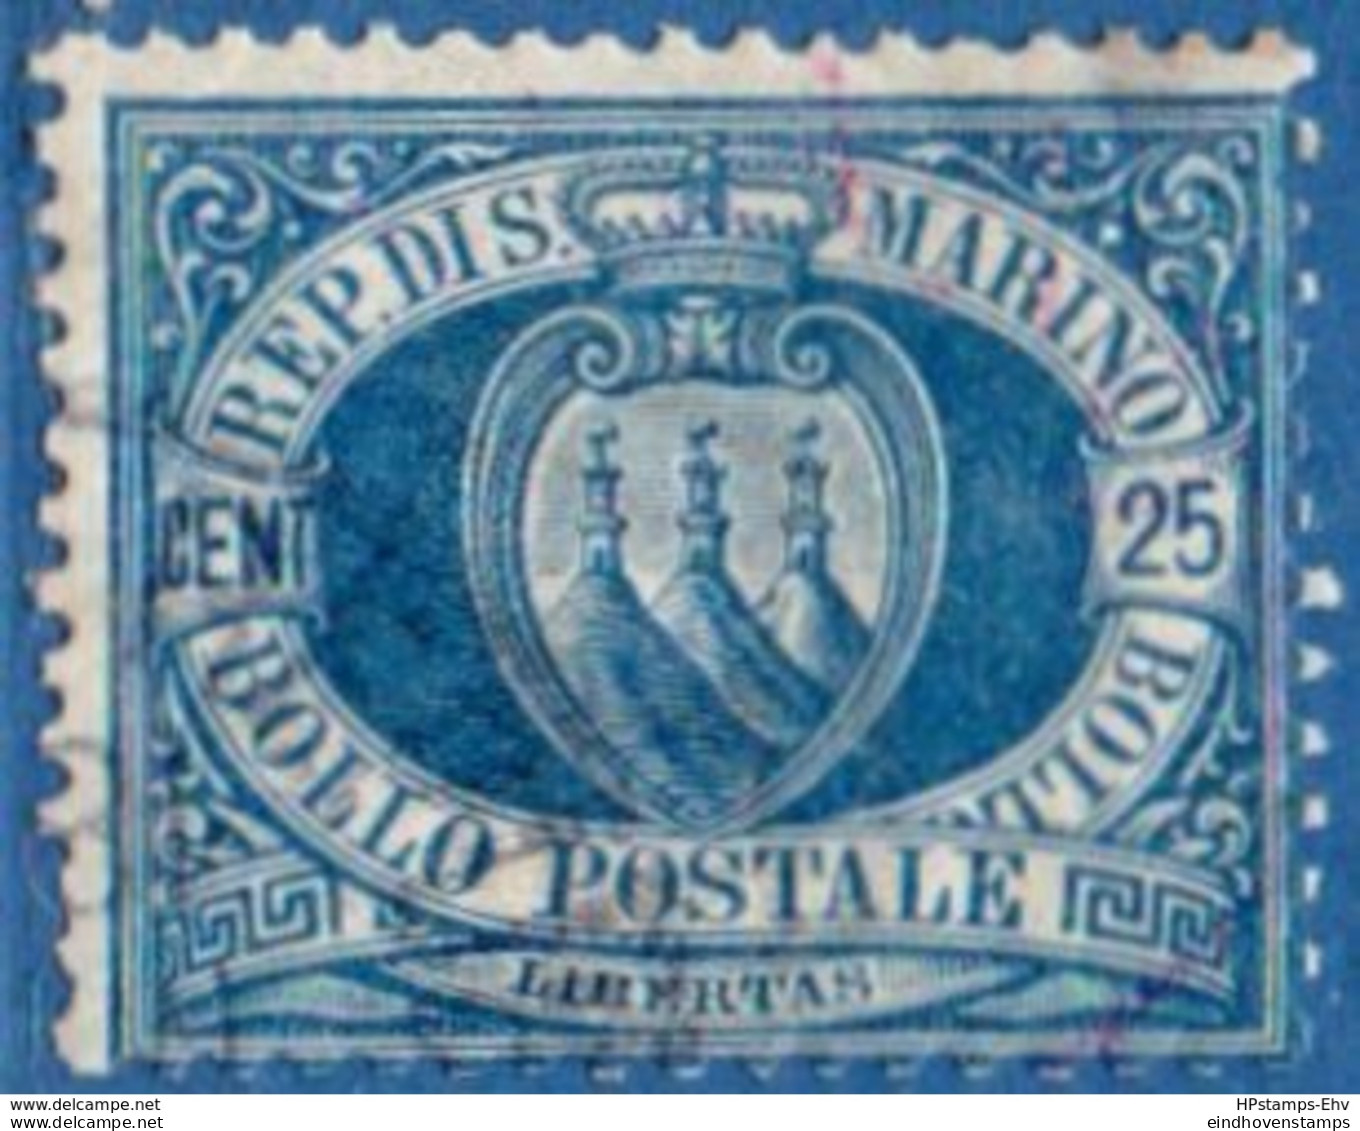 San Marino 1894 25 C Blue 1 Value Cancelled - 2005.2618 - Gebruikt